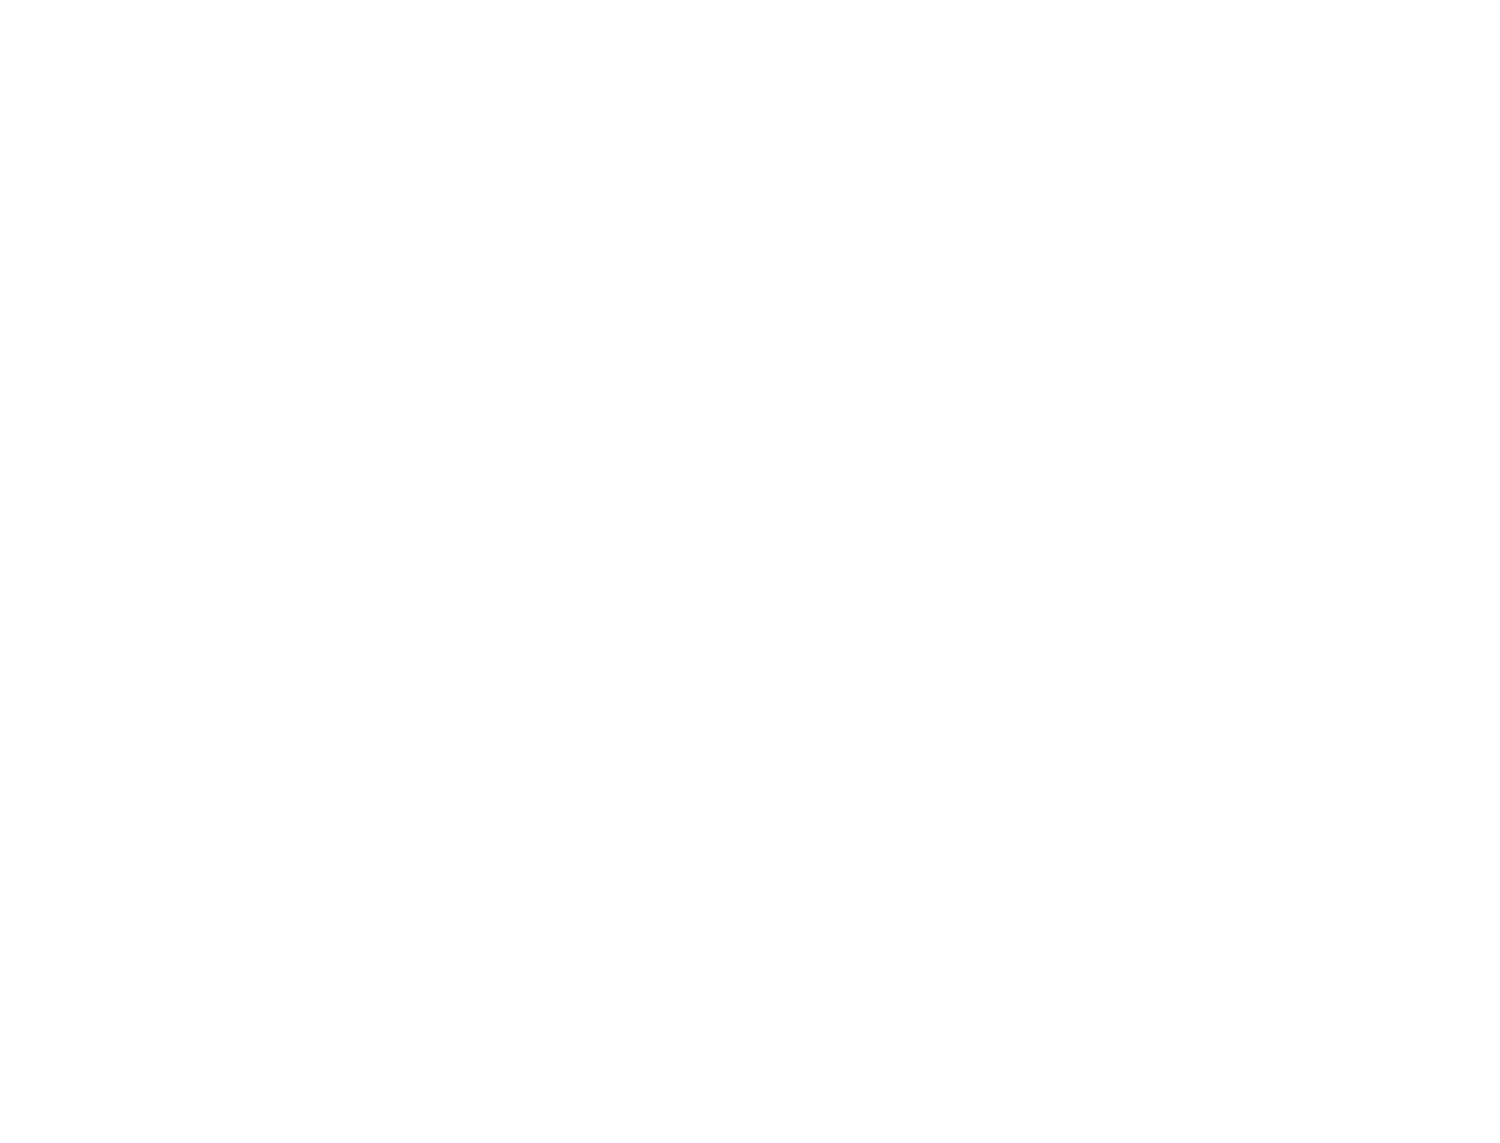 EXPLORE - X - 4